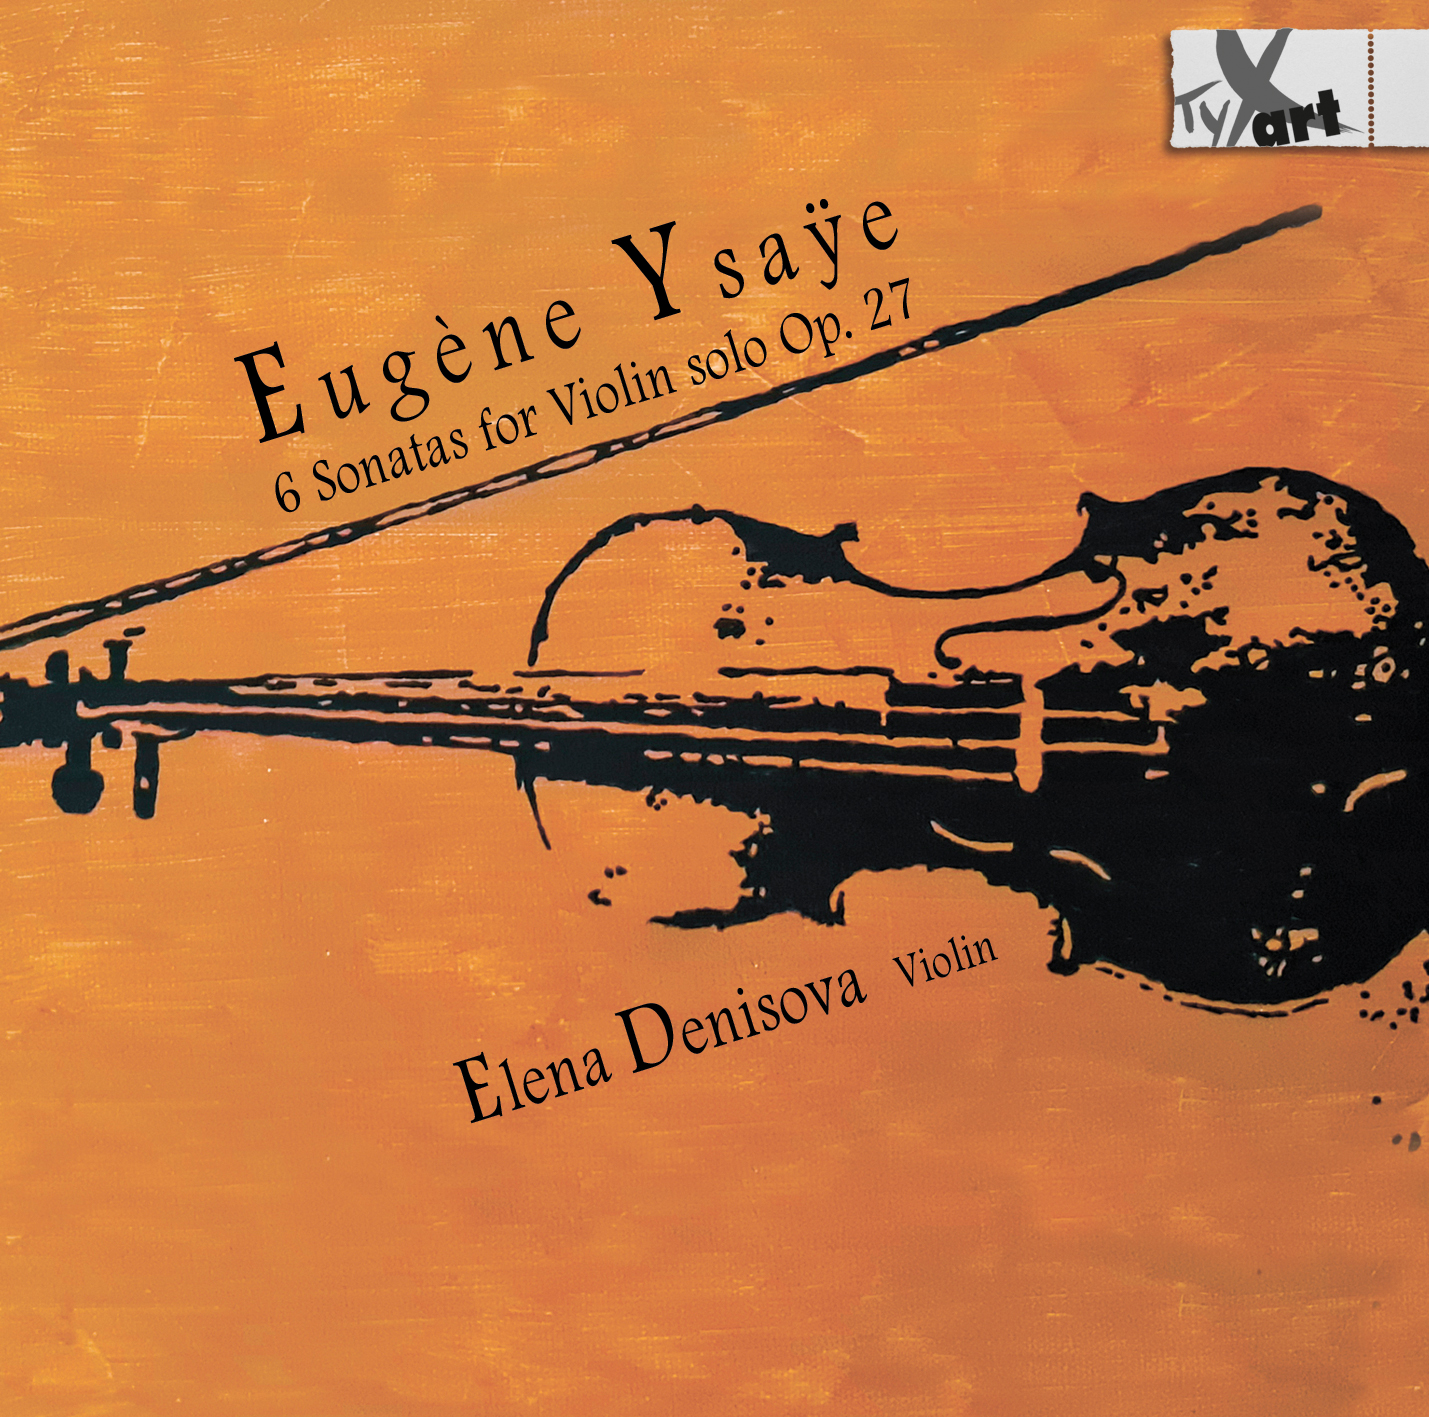 Eugène Ysaÿe: 6 Sonatas for Violin solo Op. 27 - Elena Denisova, Violin